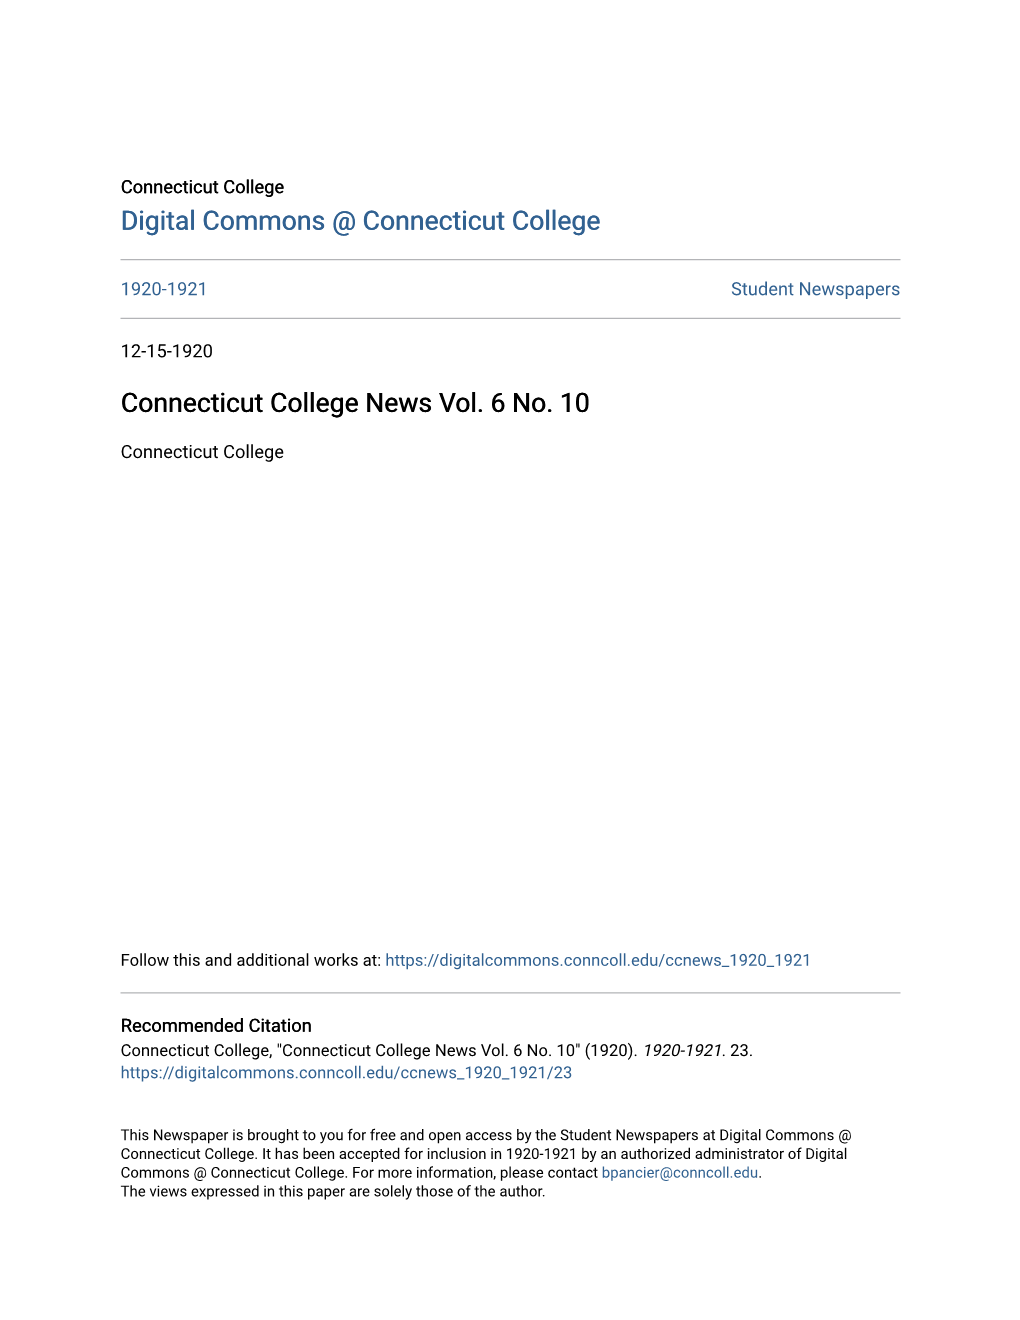 Connecticut College News Vol. 6 No. 10